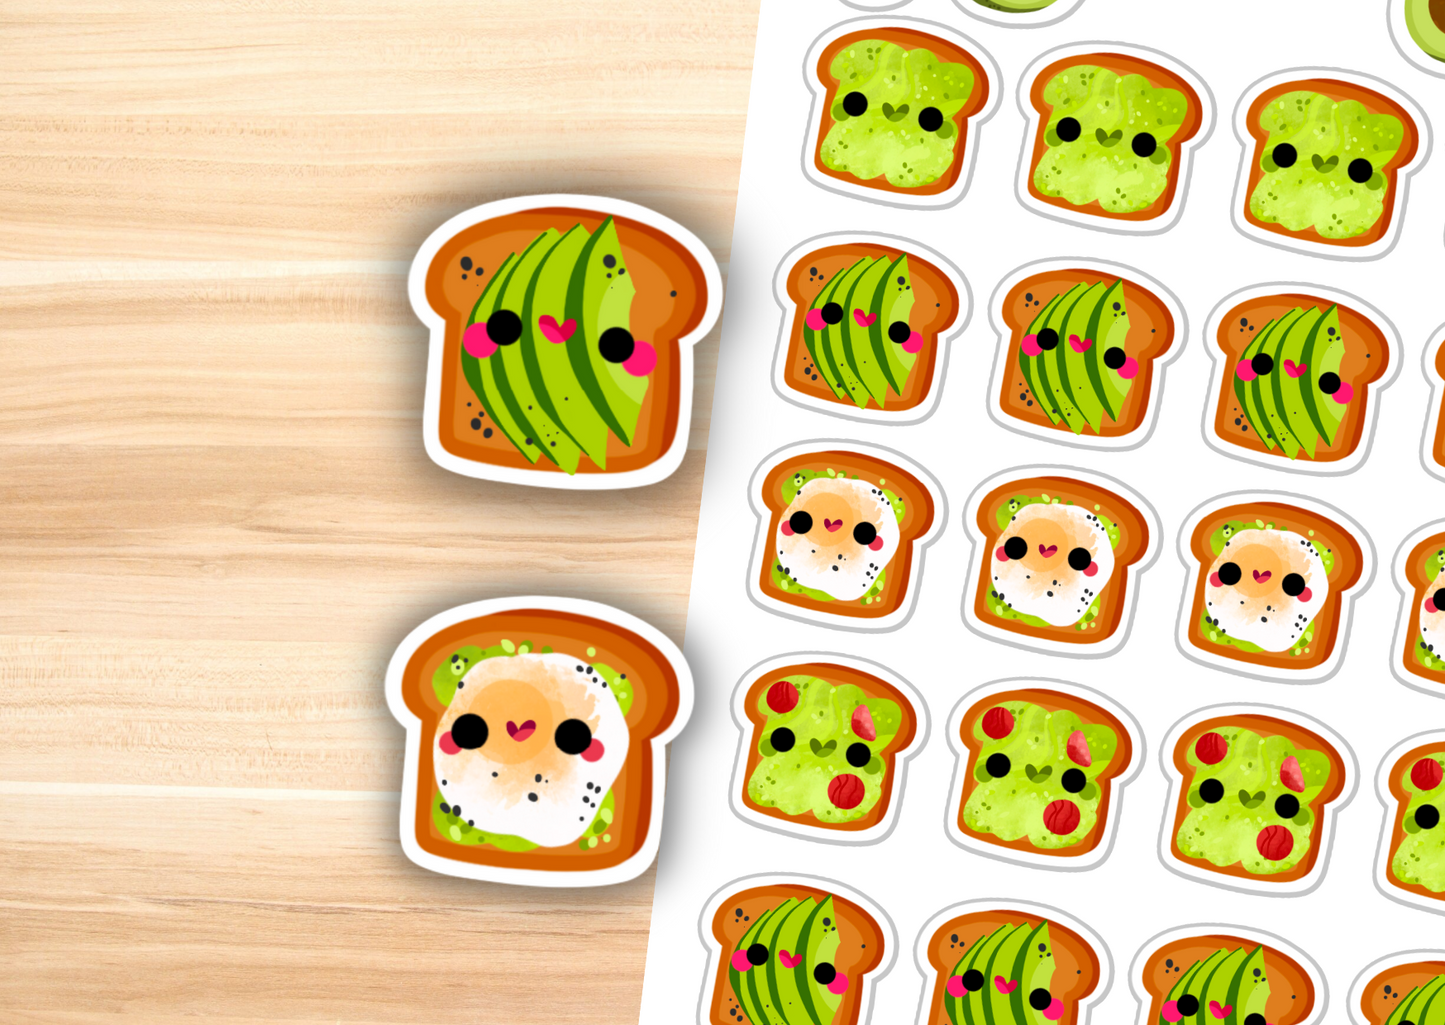 Avocado Toast Sticker Sheet | Small Planner Stickers